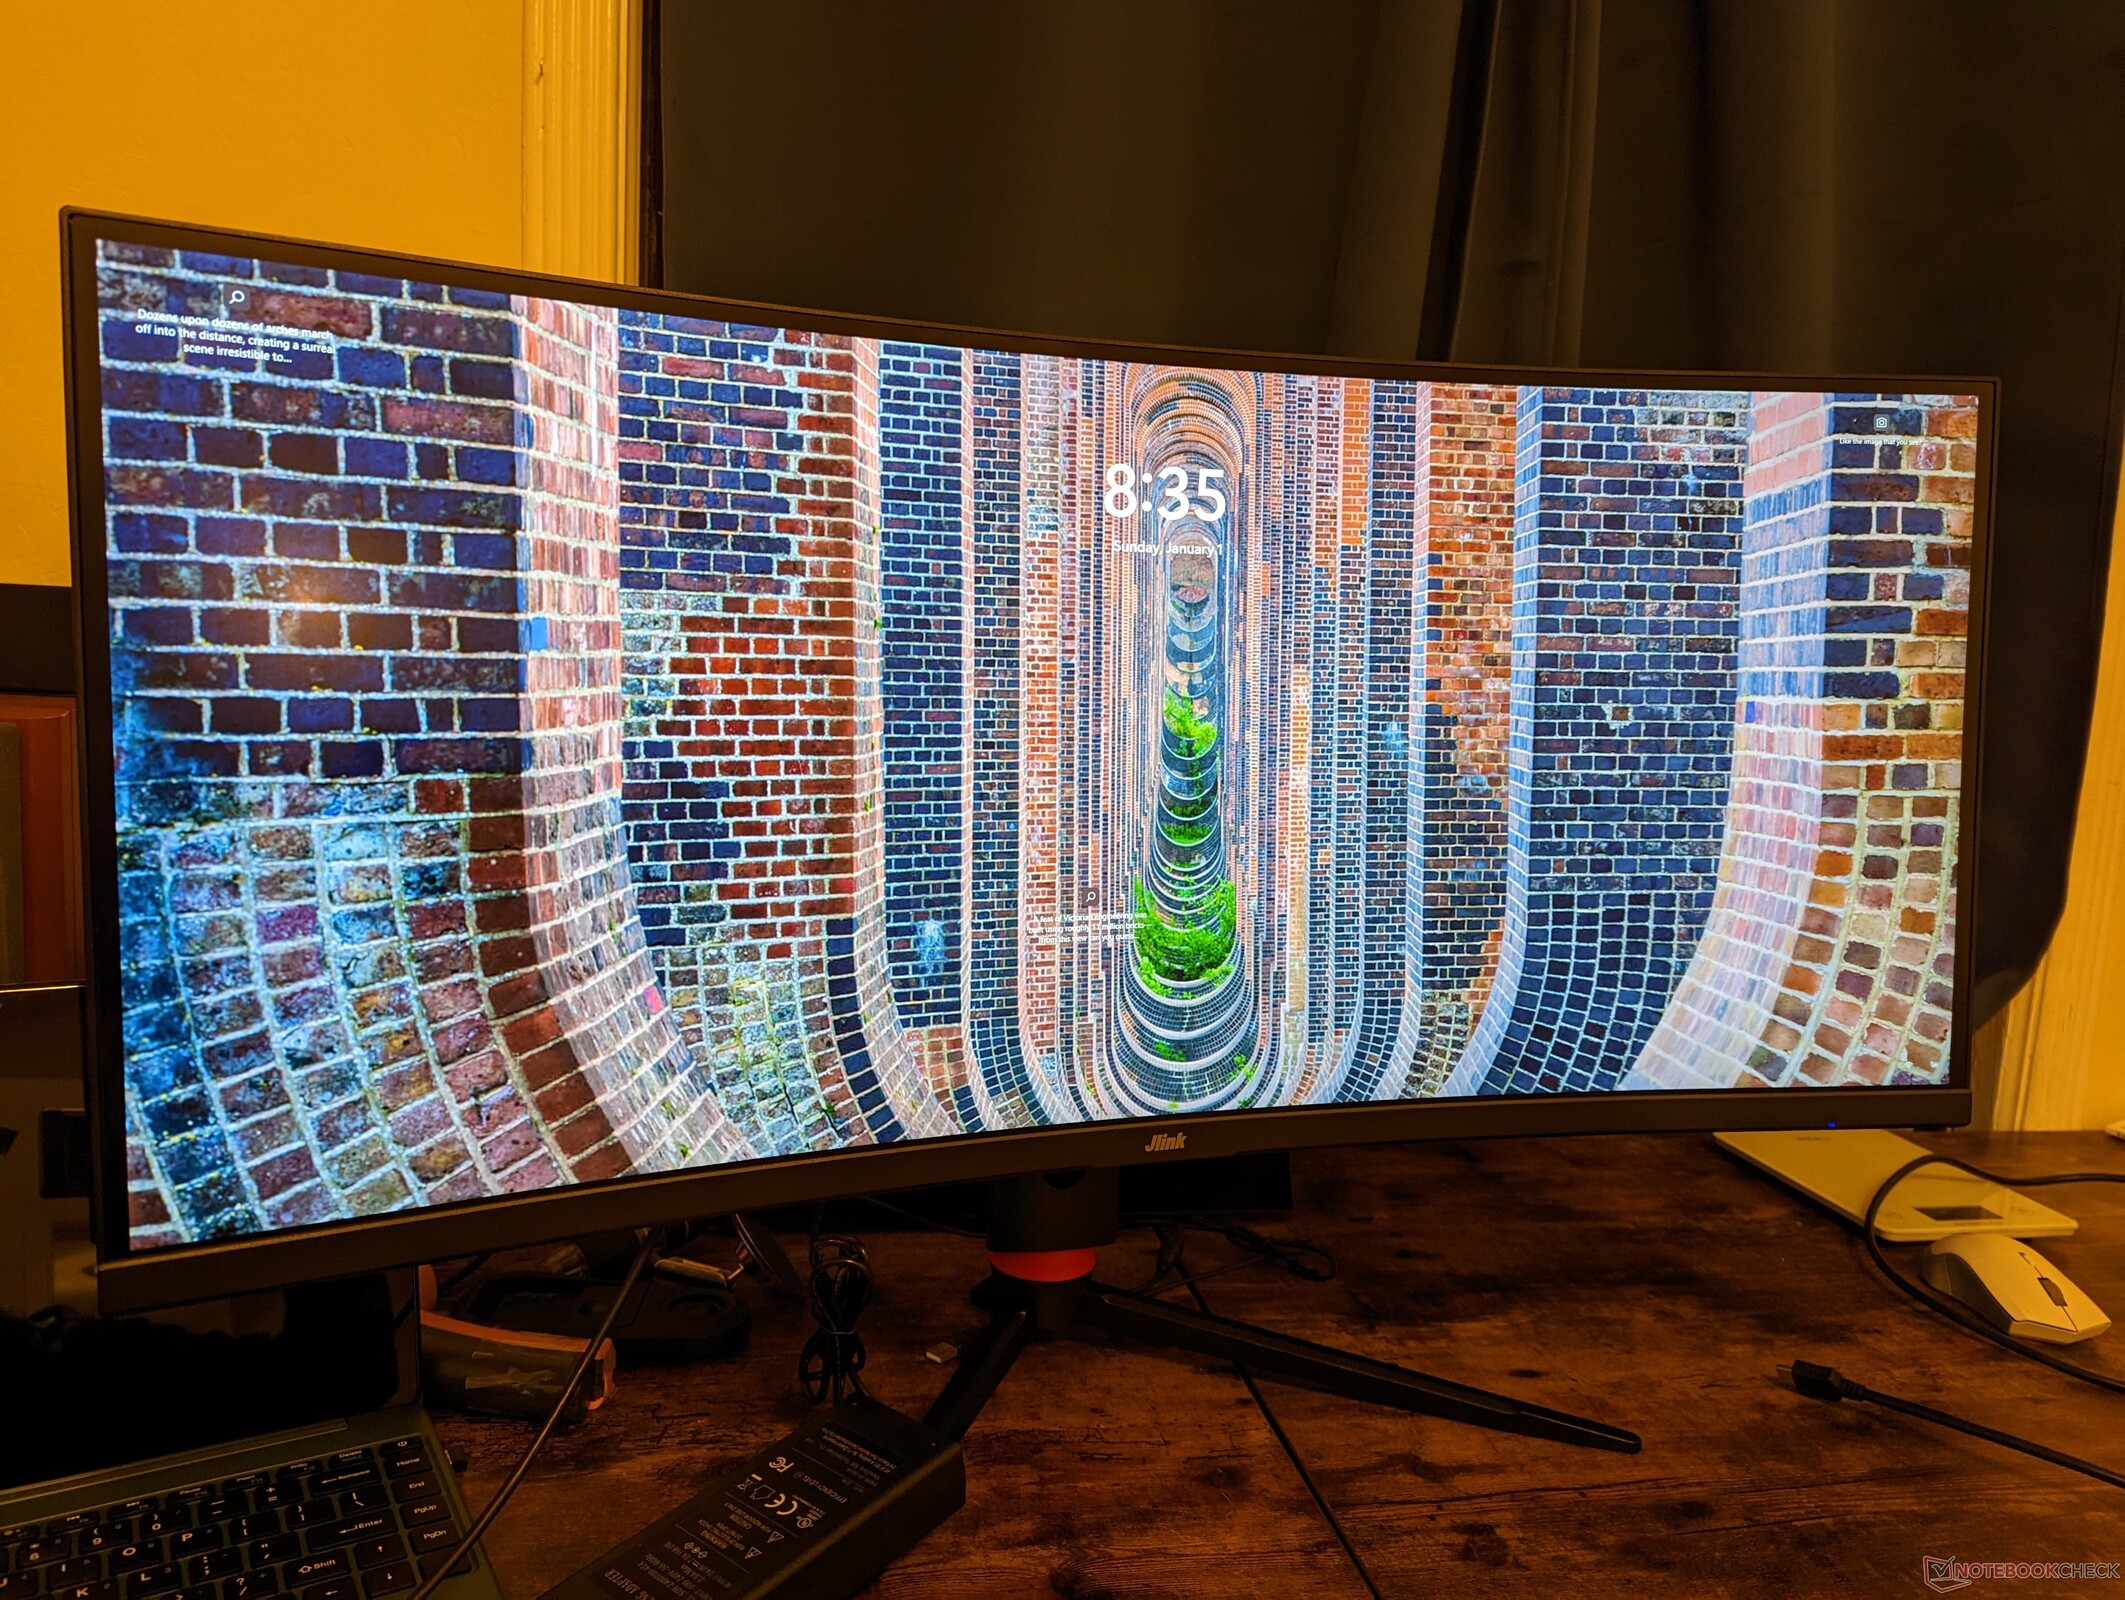 34 inch ultrawide monitor